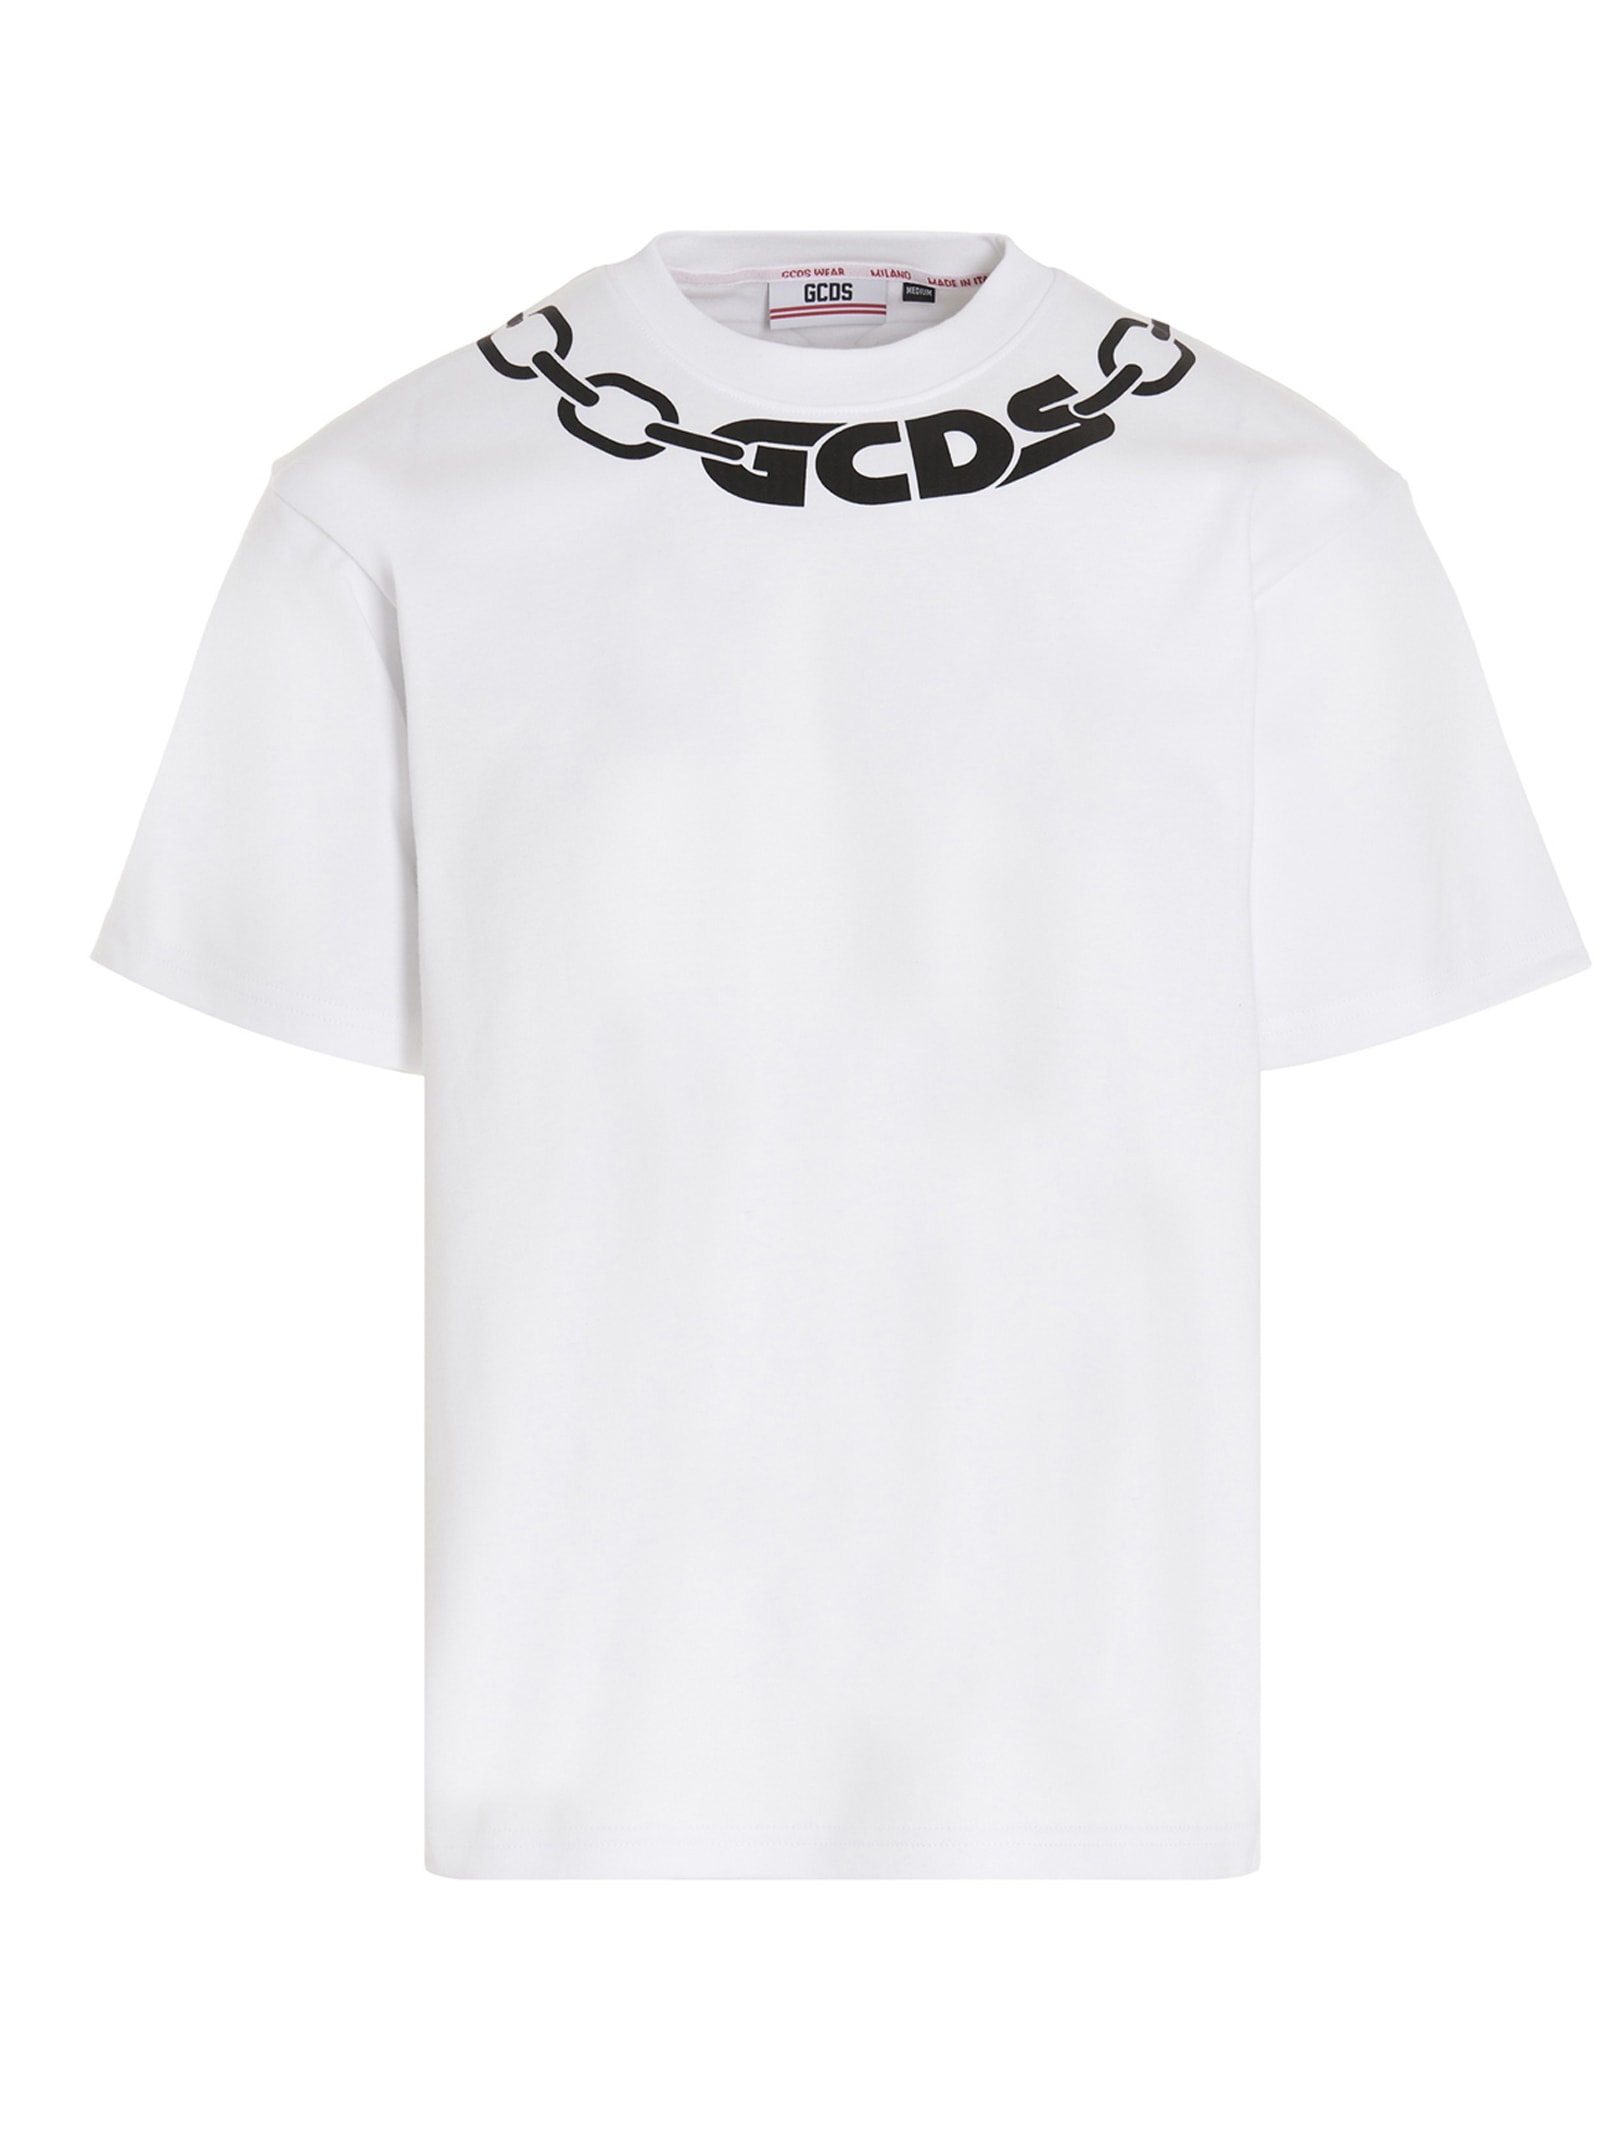 Gcds logo Chain T-shirt